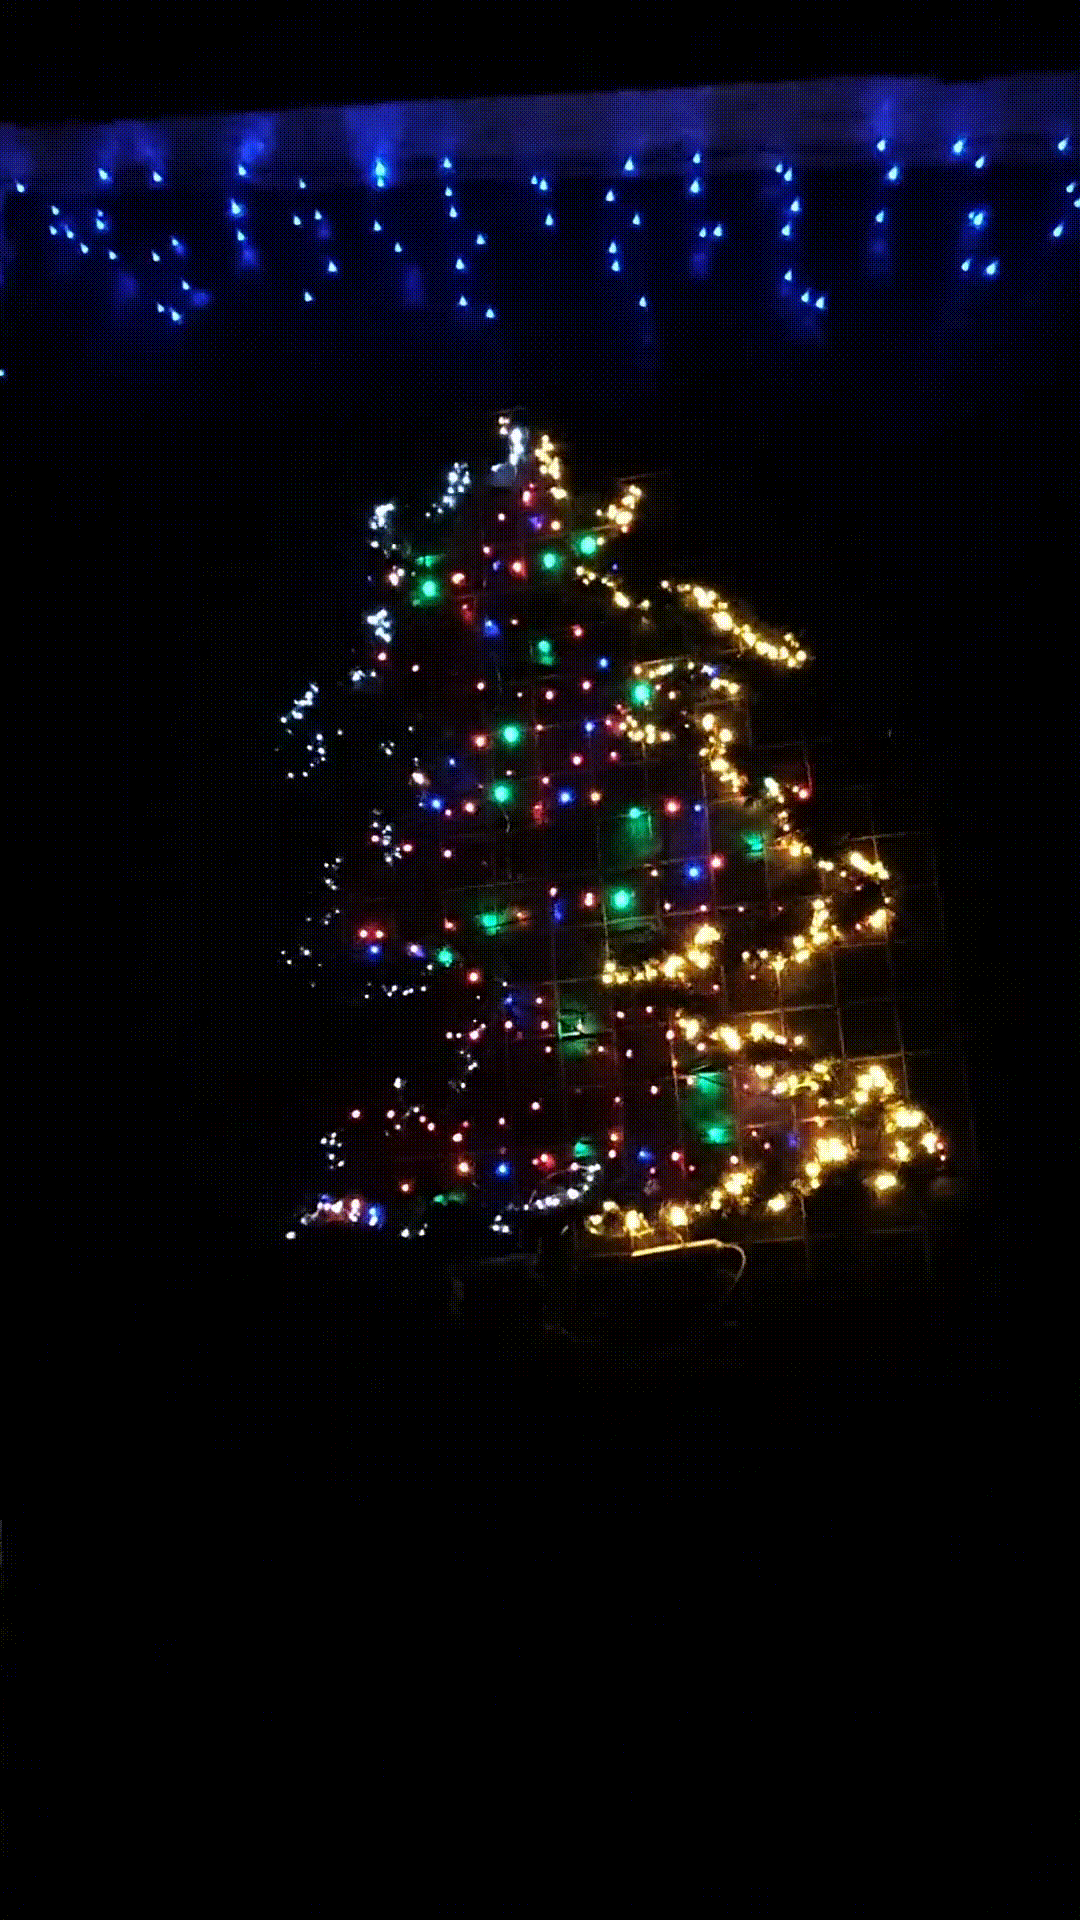 Christmas lights on a building